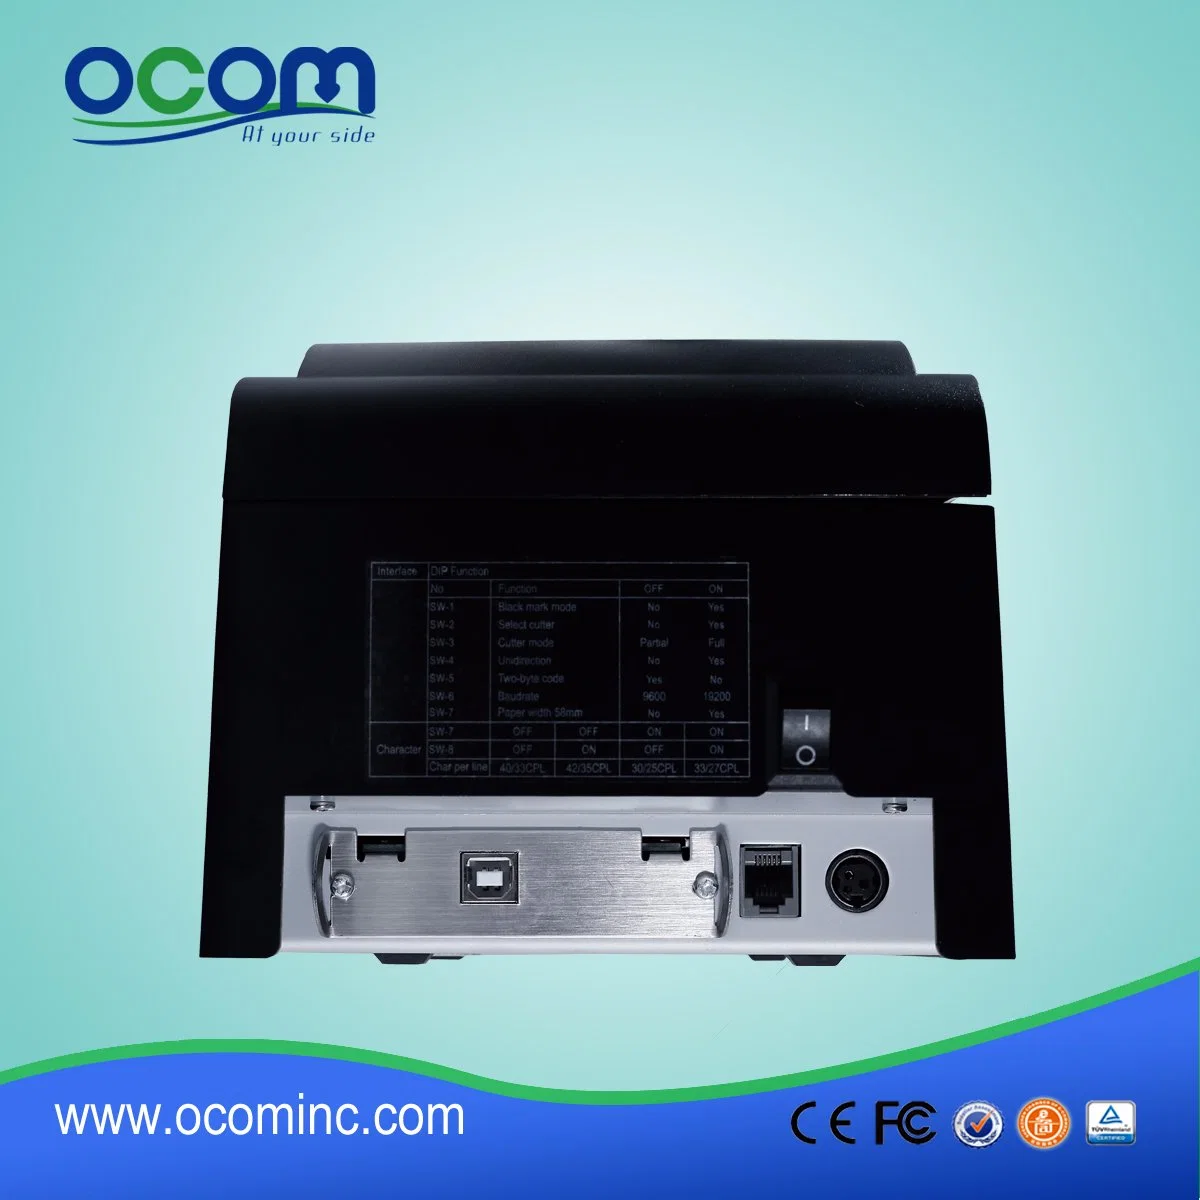 Ocpp-762-P 76mm Impact DOT Matrix Receipt Printer with 36p Parallel Port